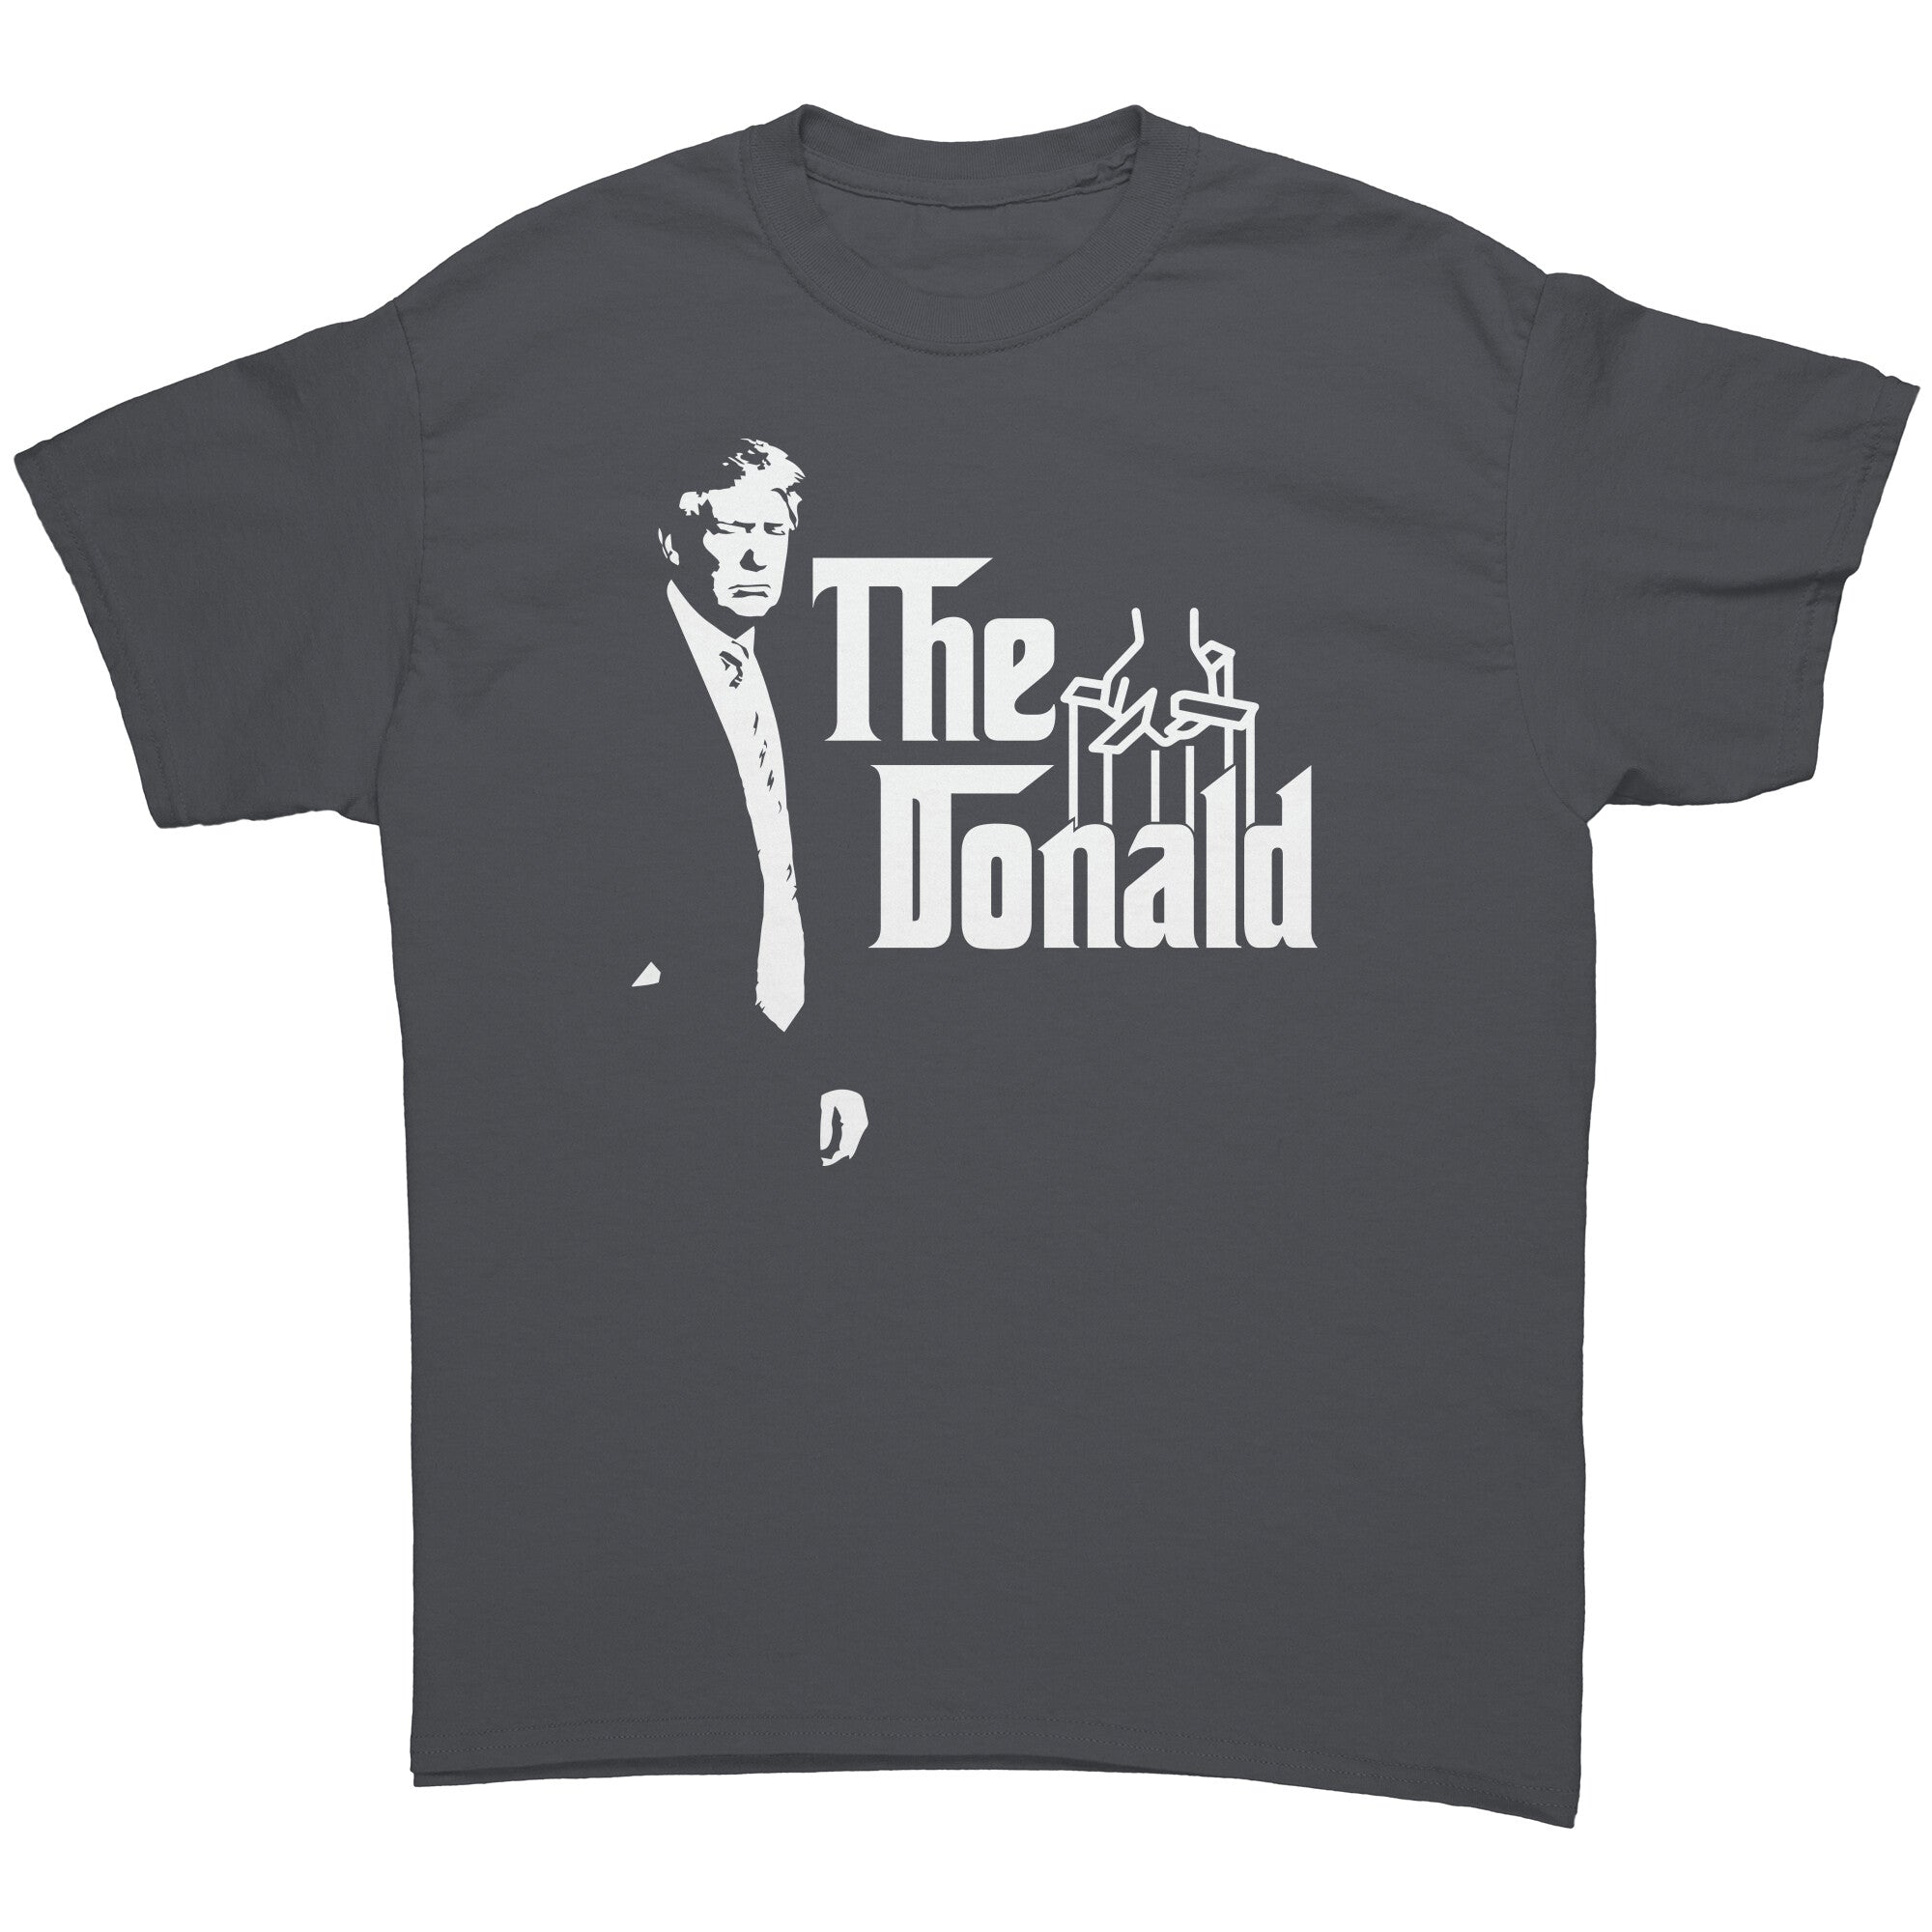 The Donald -Apparel | Drunk America 